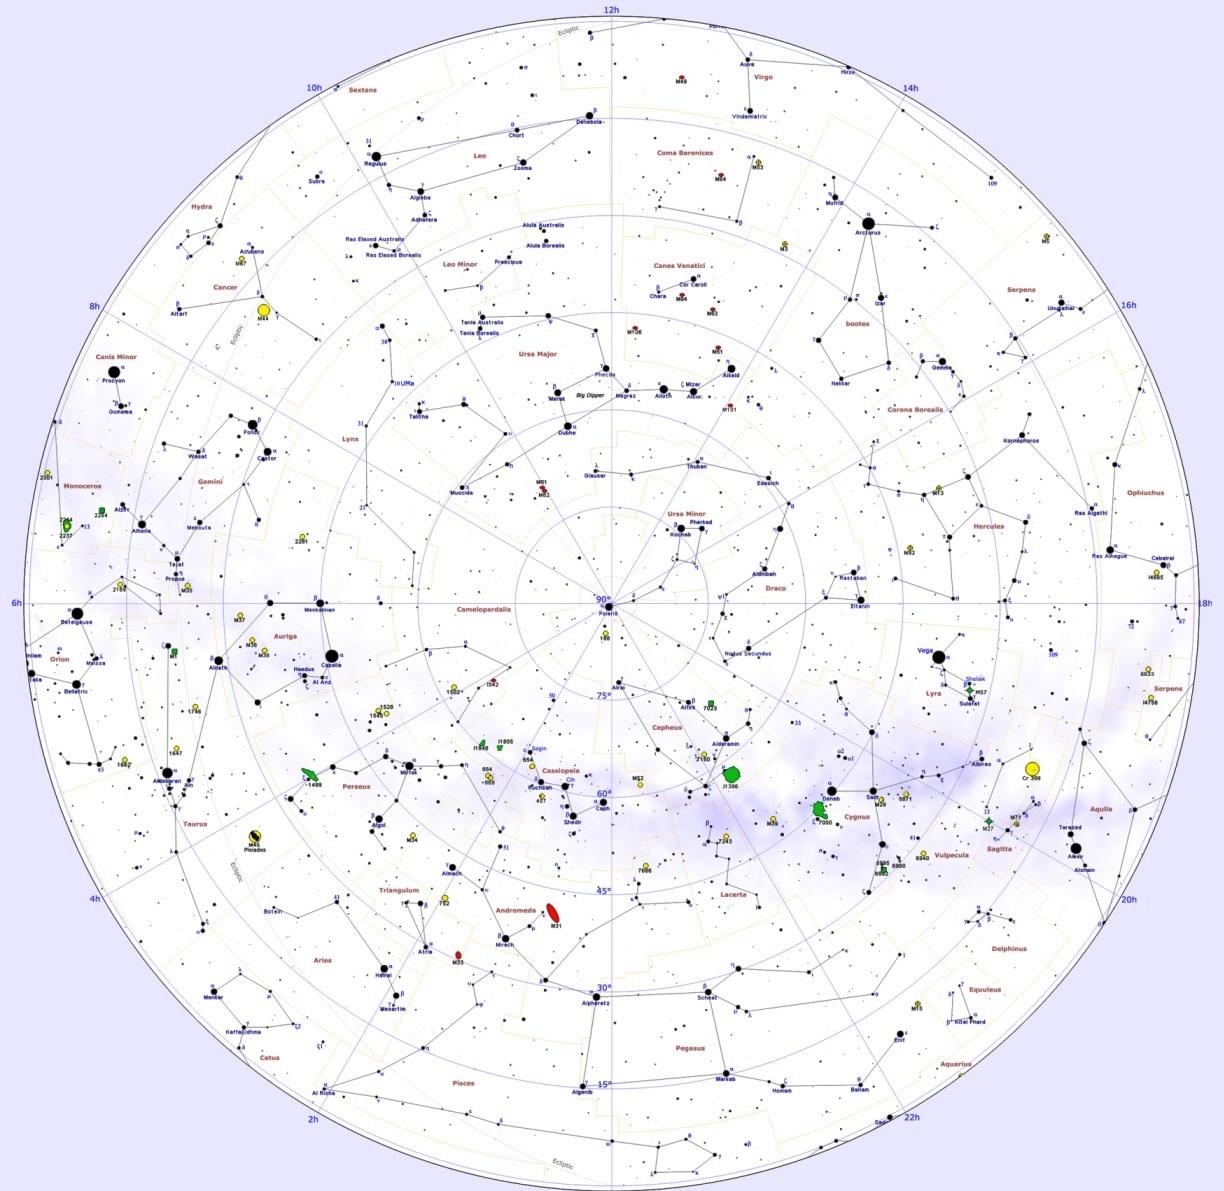 constellations map southern hemisphere